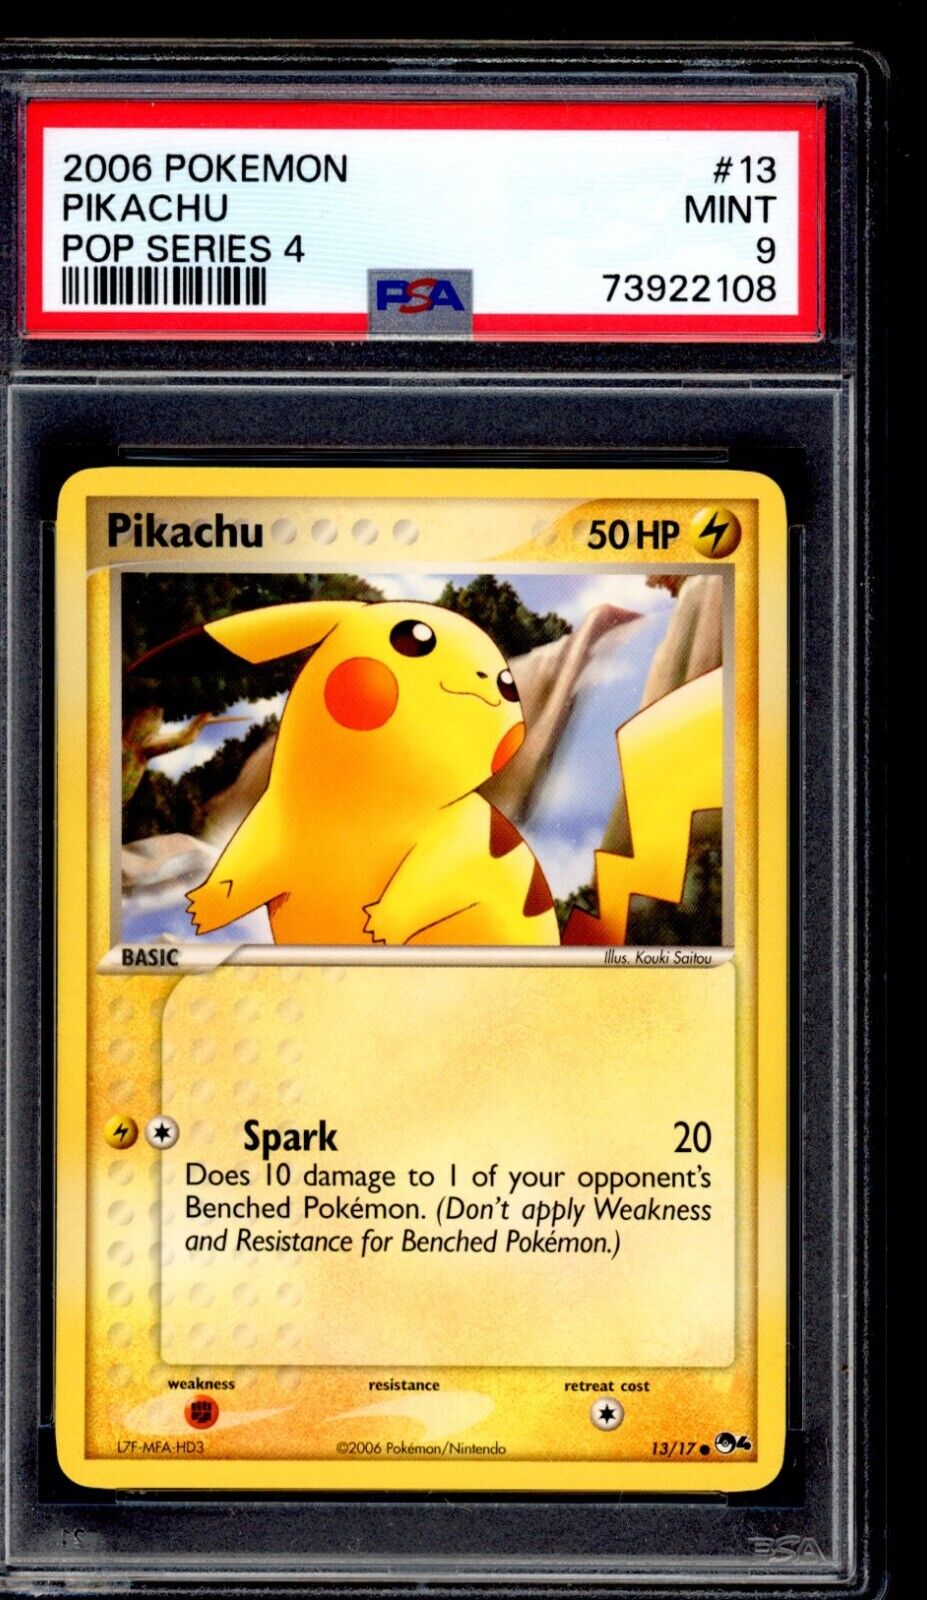 PSA 9 Pikachu 2006 Pokemon Card 13/17 Pop Series 4